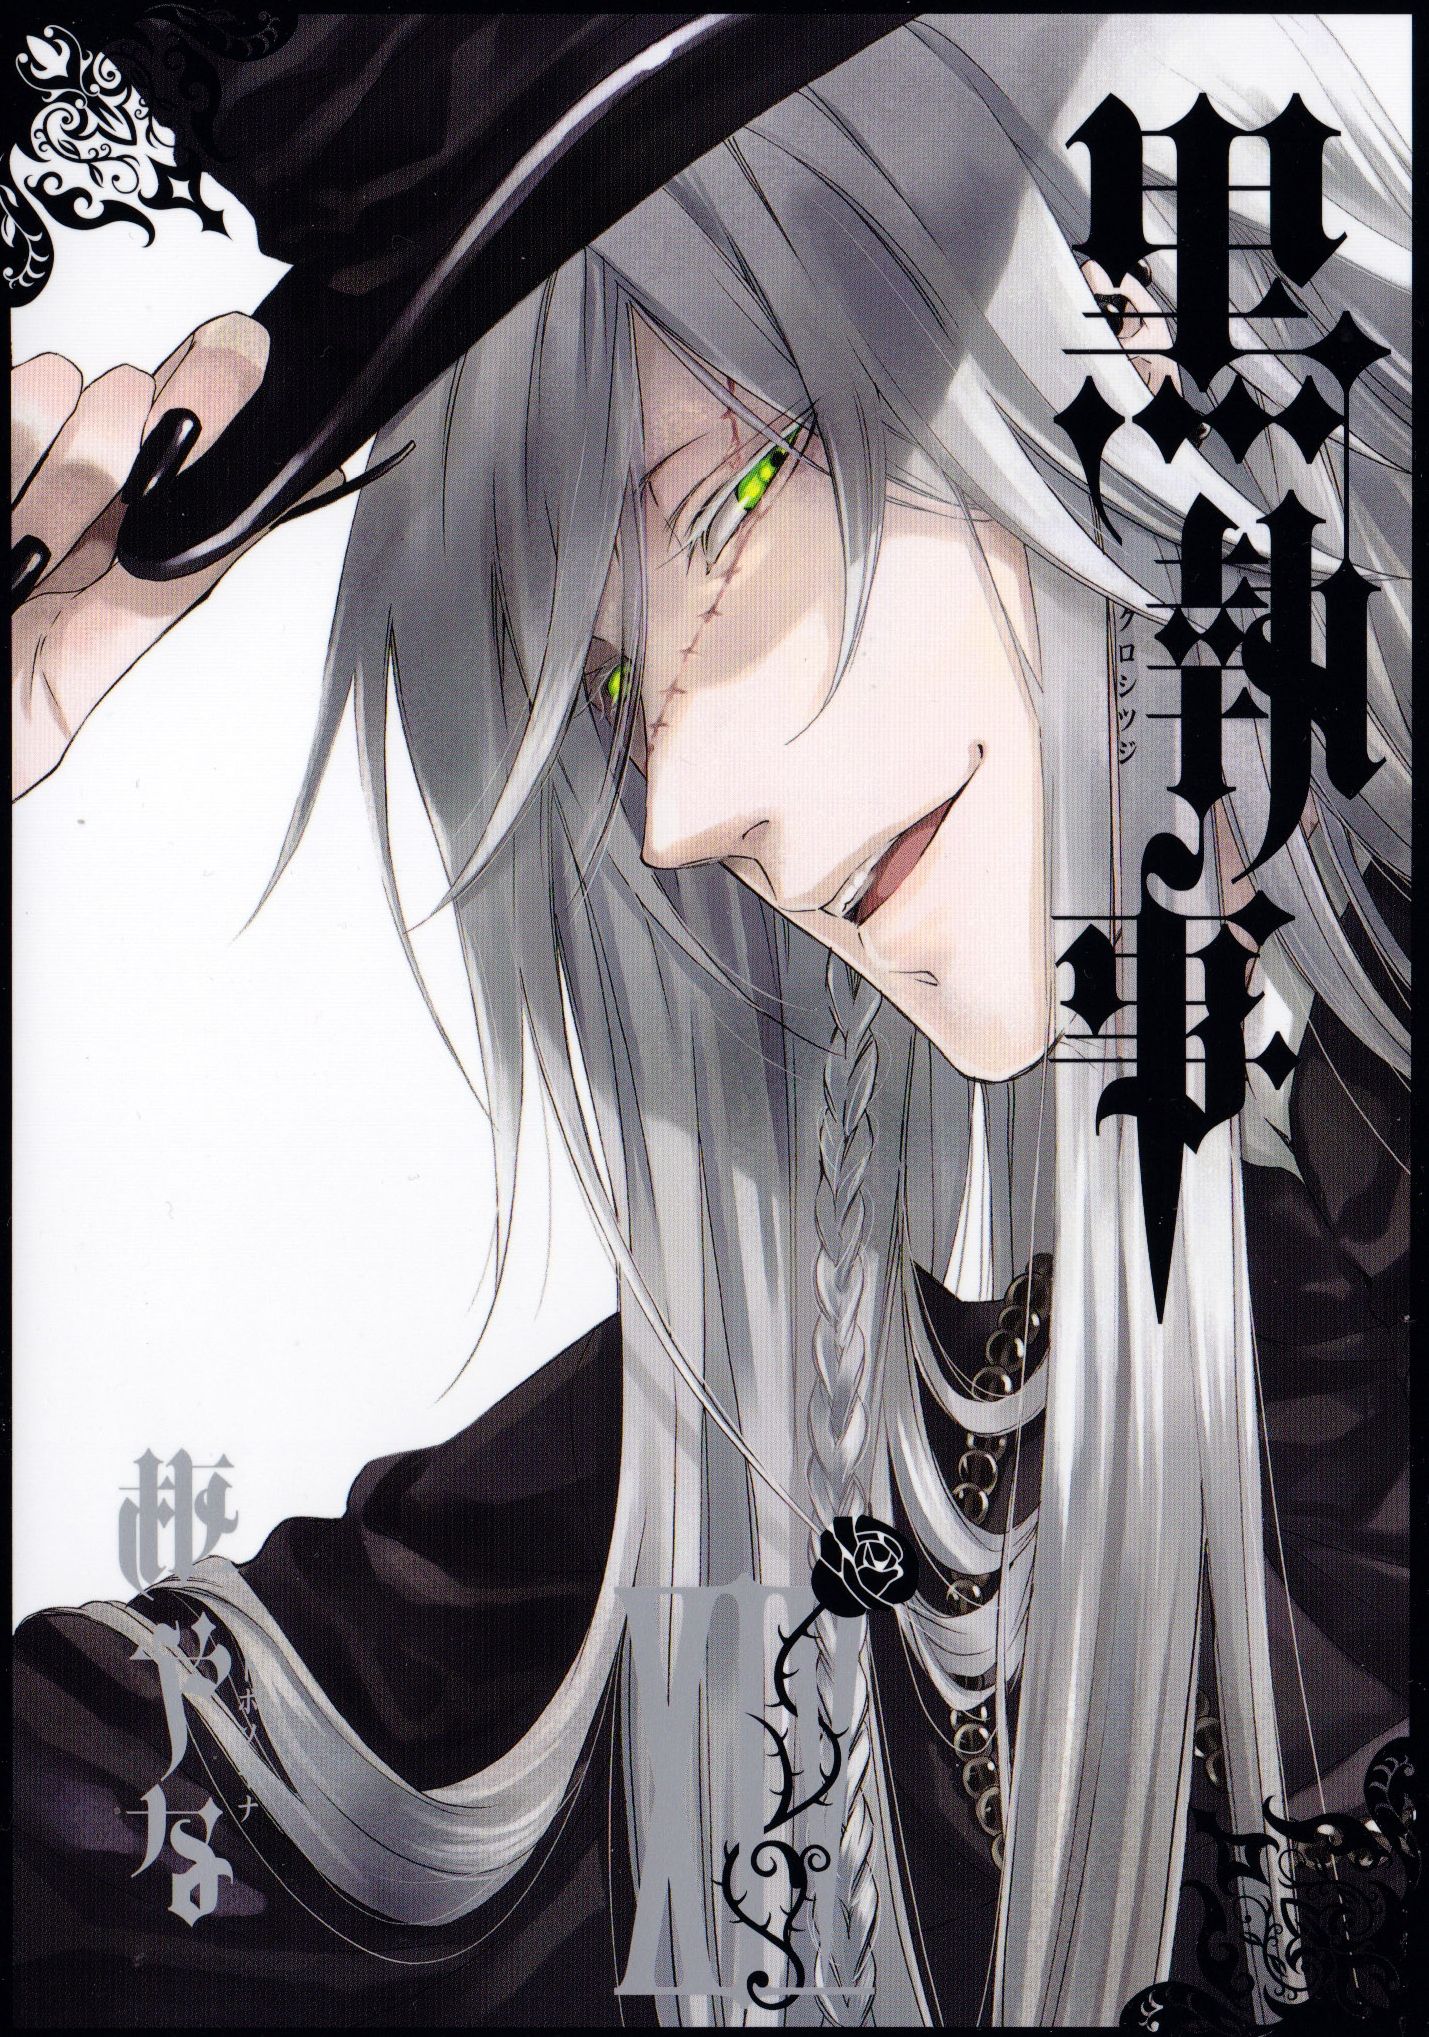 Kuroshitsuji (Black Butler), Mobile Wallpaper Anime Image Board